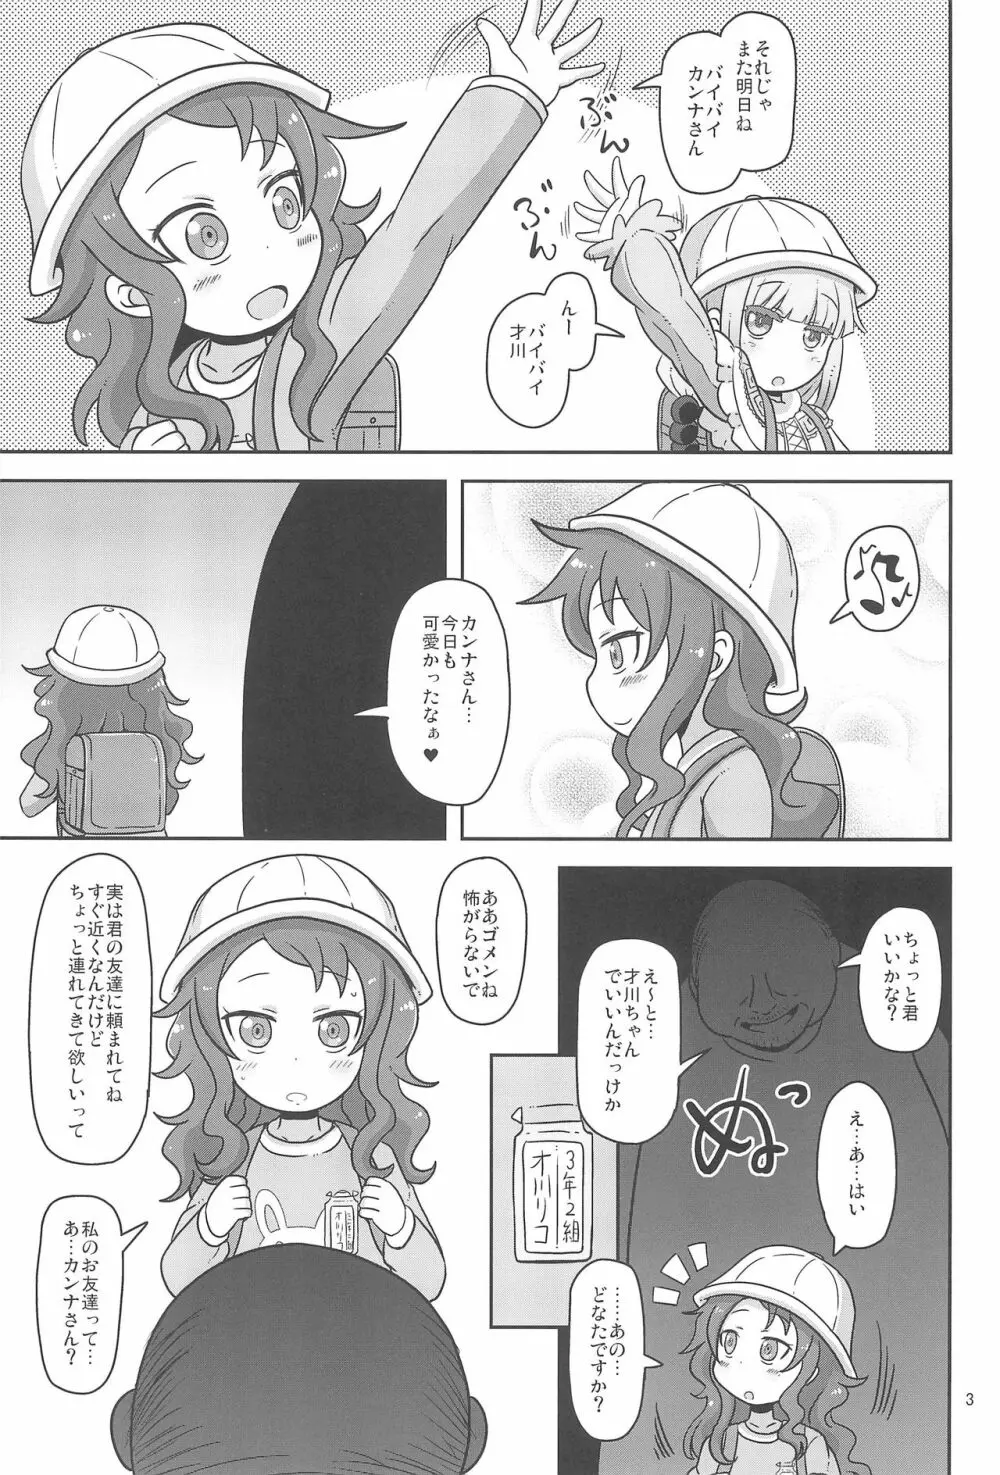 Dragonic Lolita Bomb! - page3